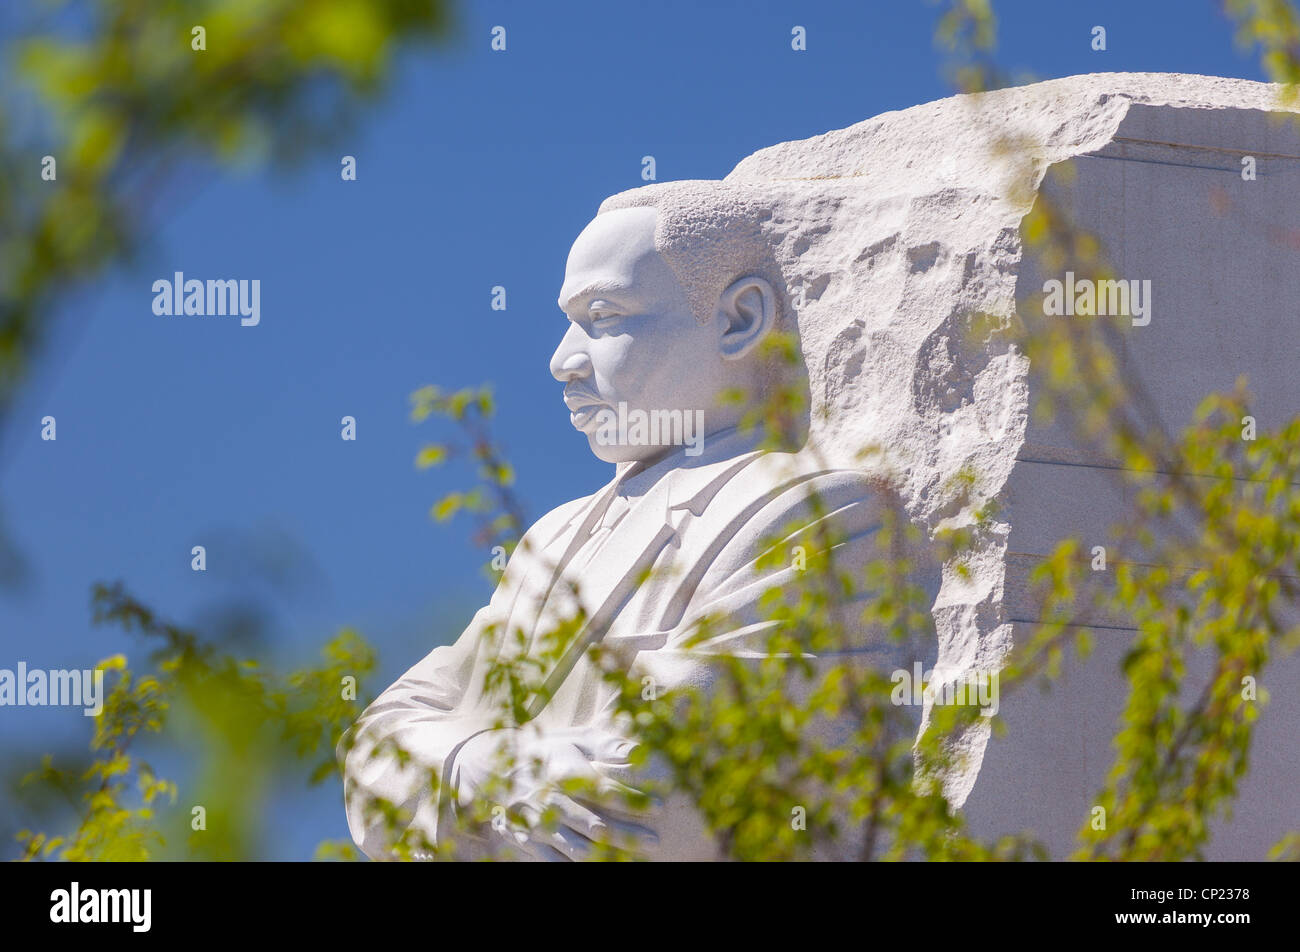 WASHINGTON, DC, USA - Martin Luther King Memorial, seen through tree branches. Stock Photo